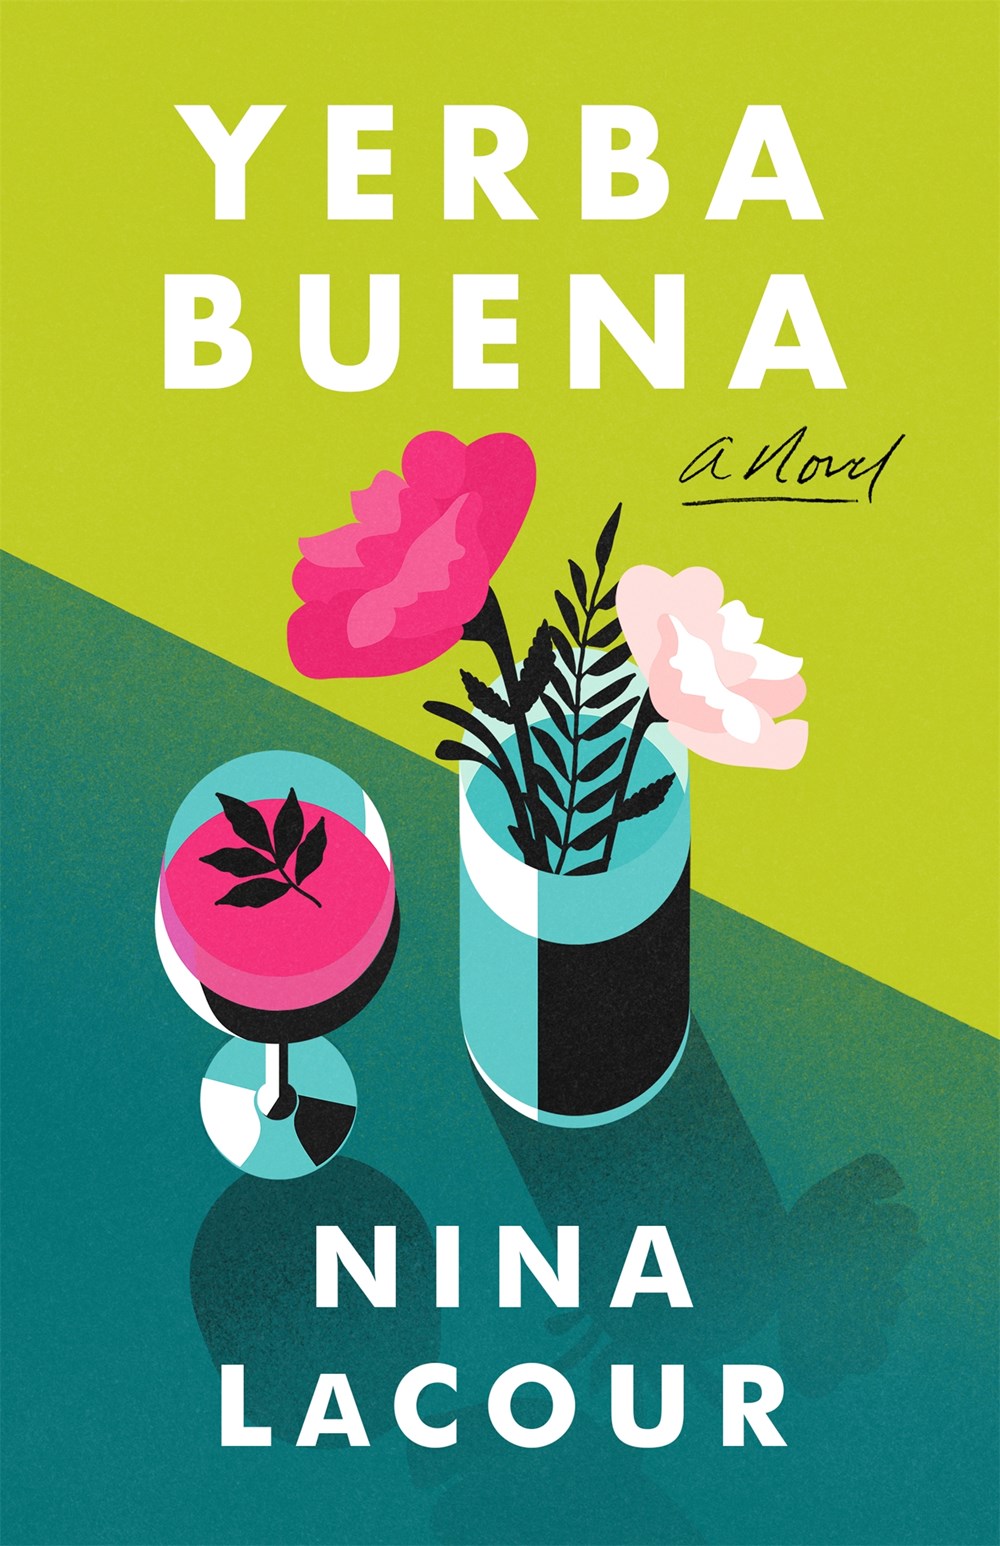 Image of "Yerba Buena"